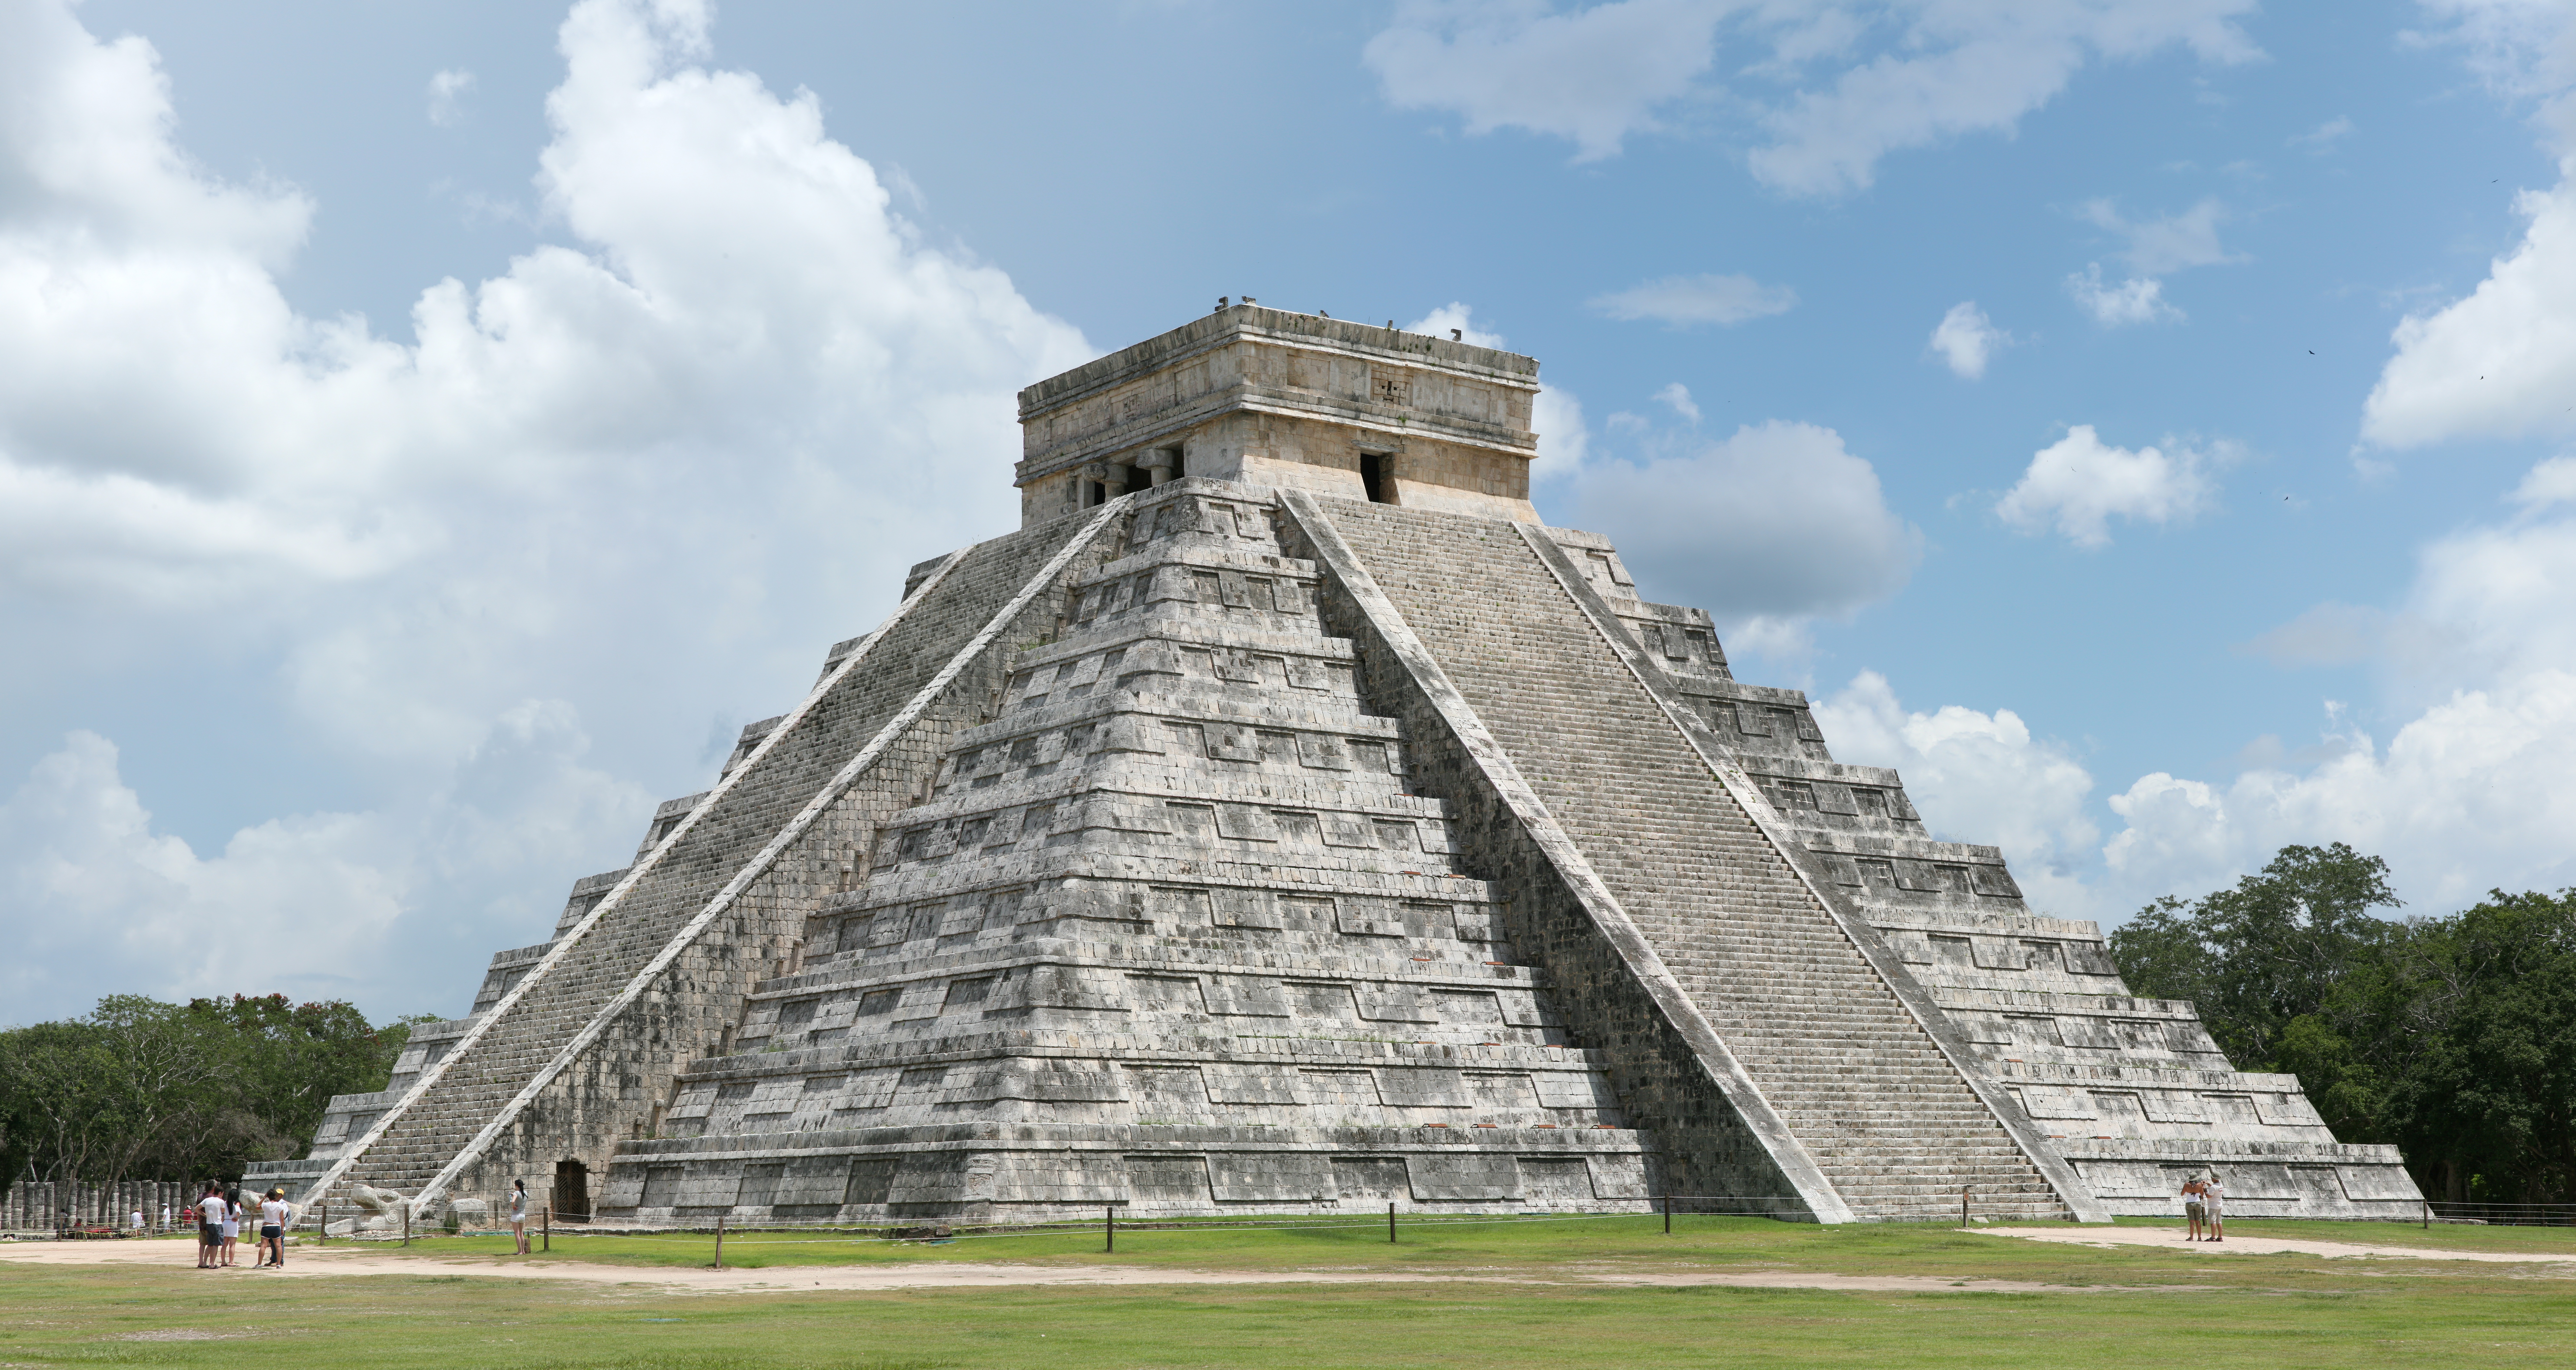 El castillo at Chichen itaz, a heritage site of the Maya Civilization